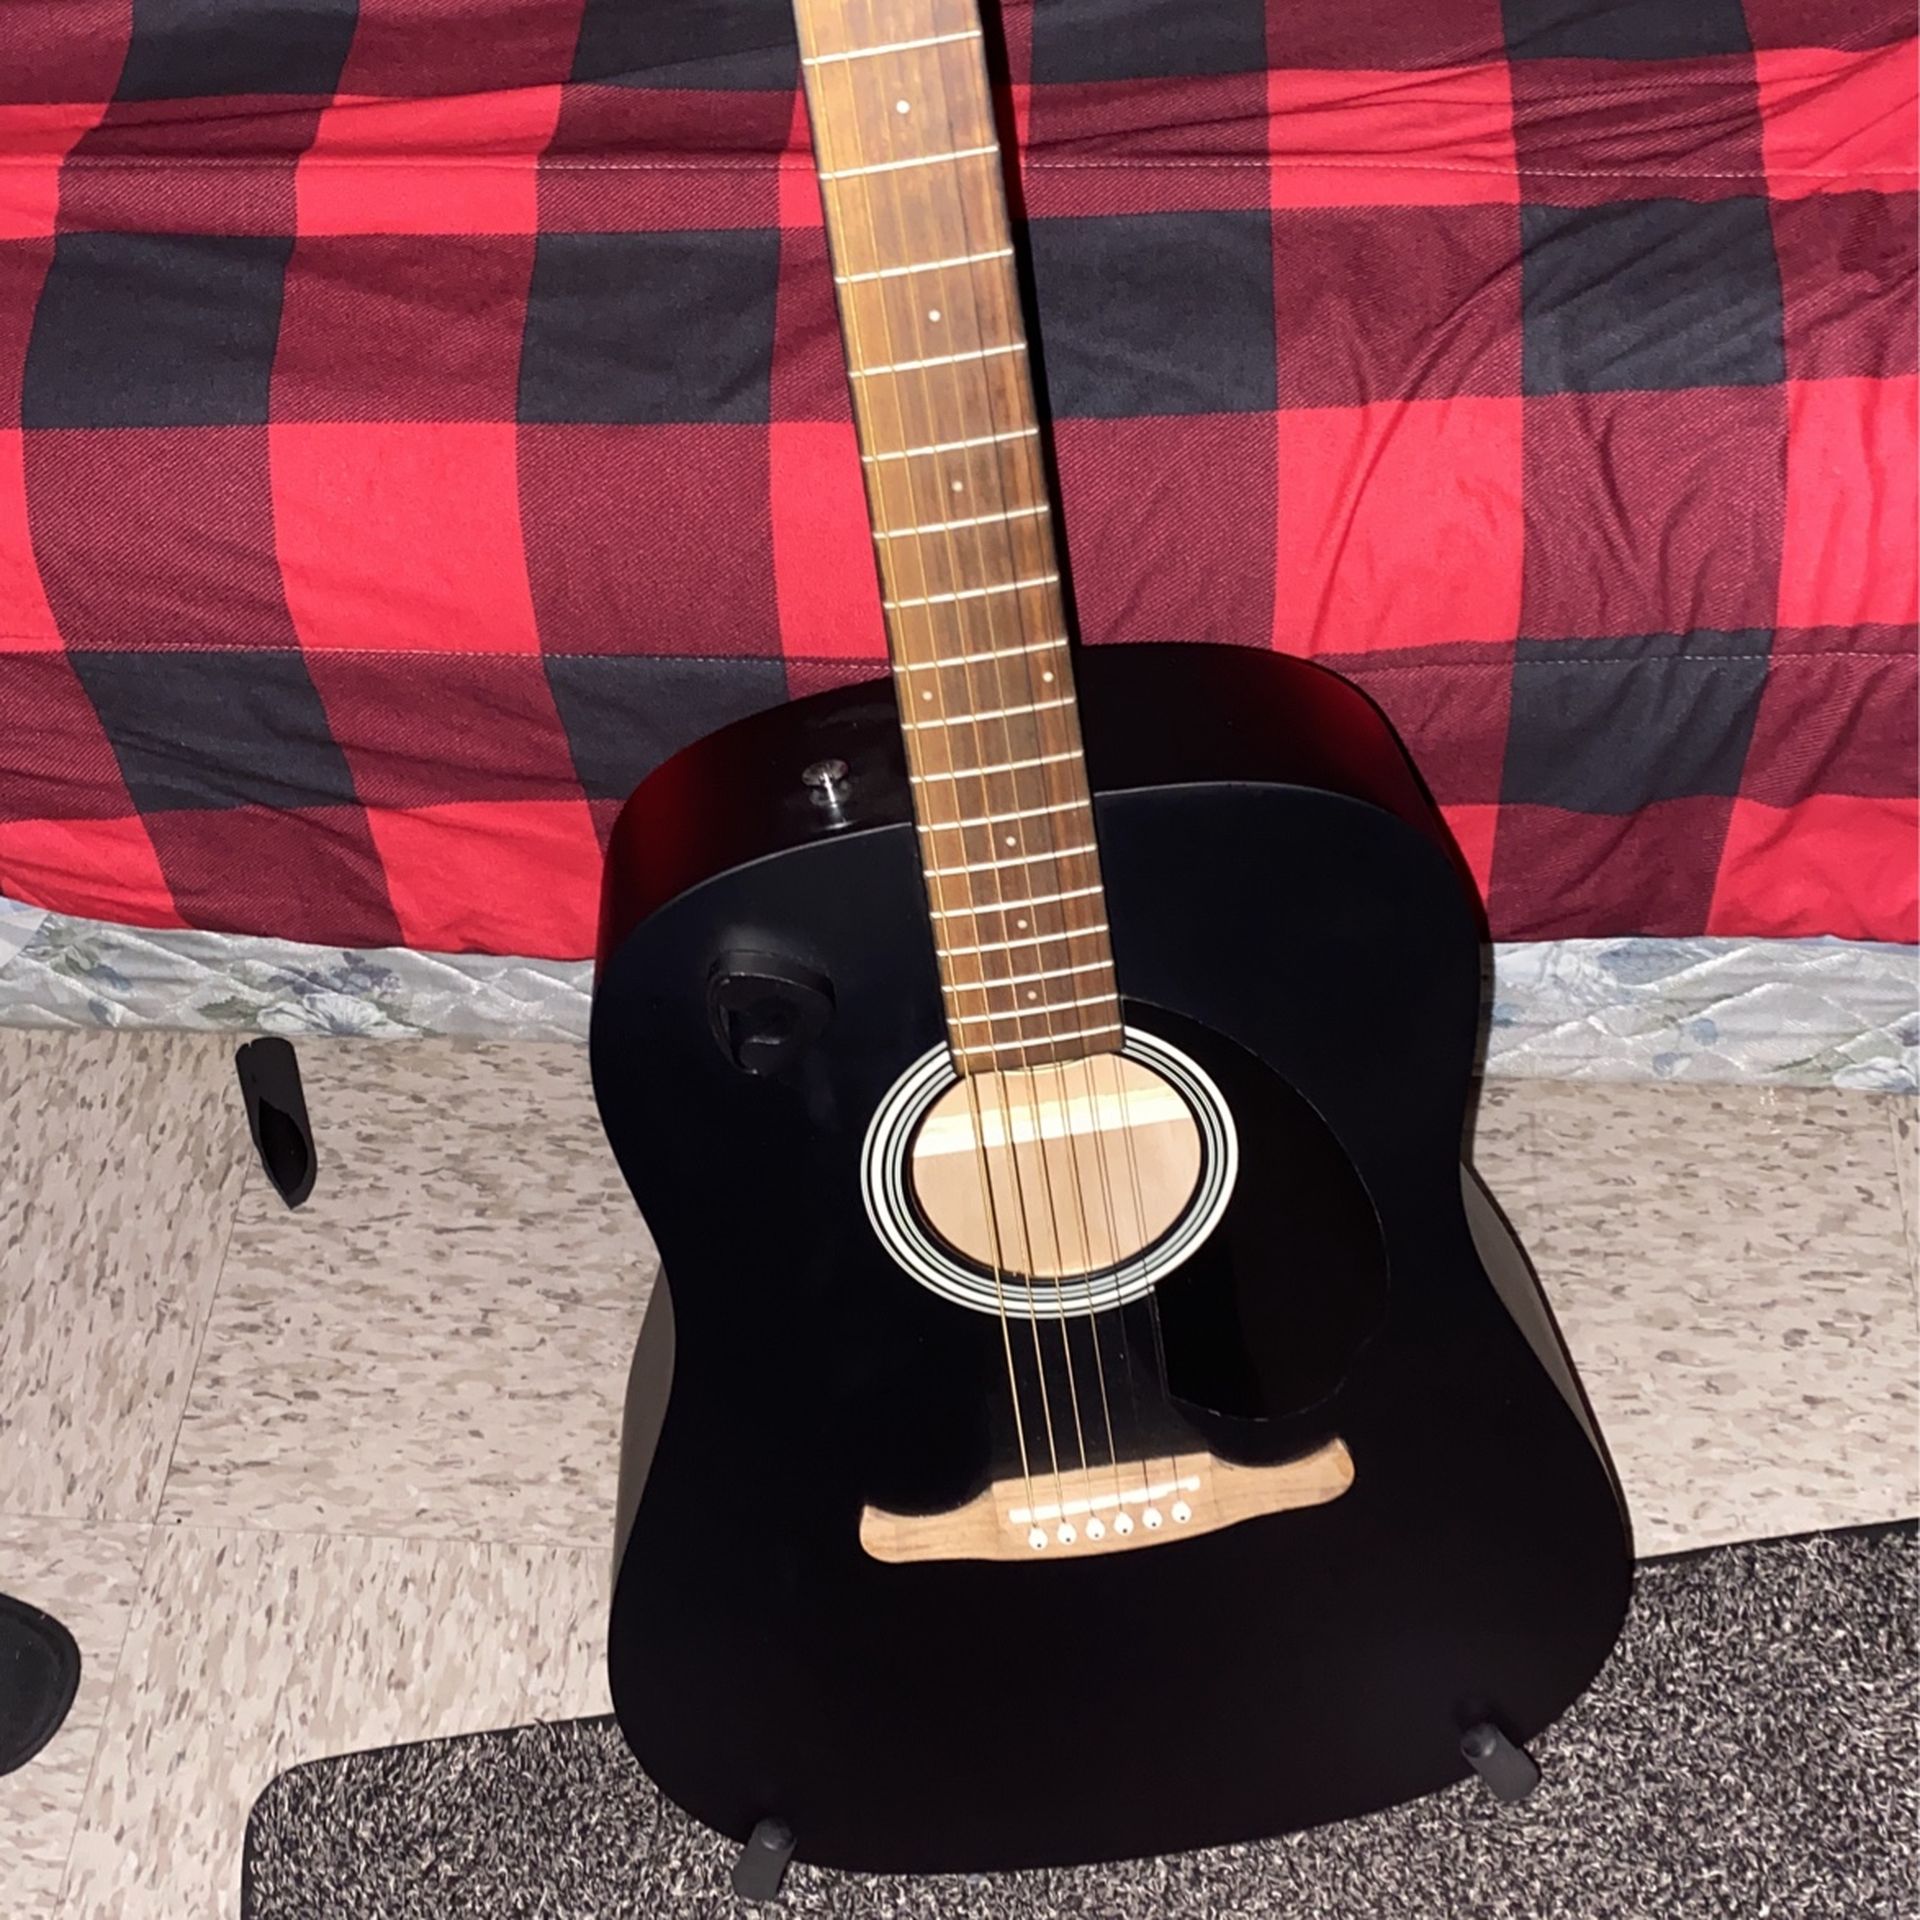 Acoustic Fender Guitar